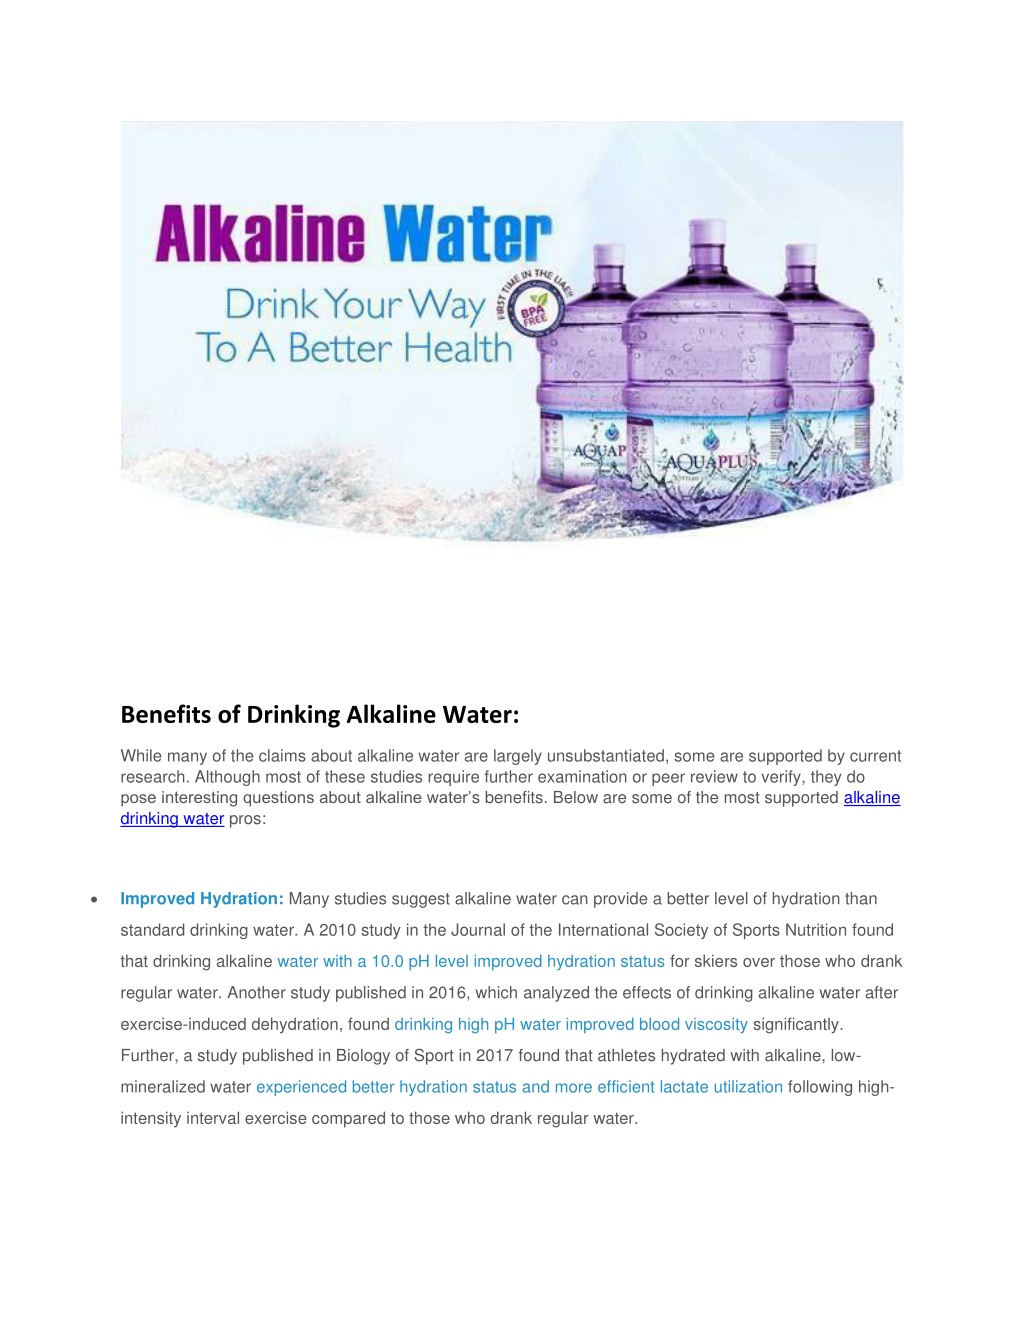 Ppt Benefits Of Drinking Alkaline Water Powerpoint Presentation Free Download Id10858414 5946